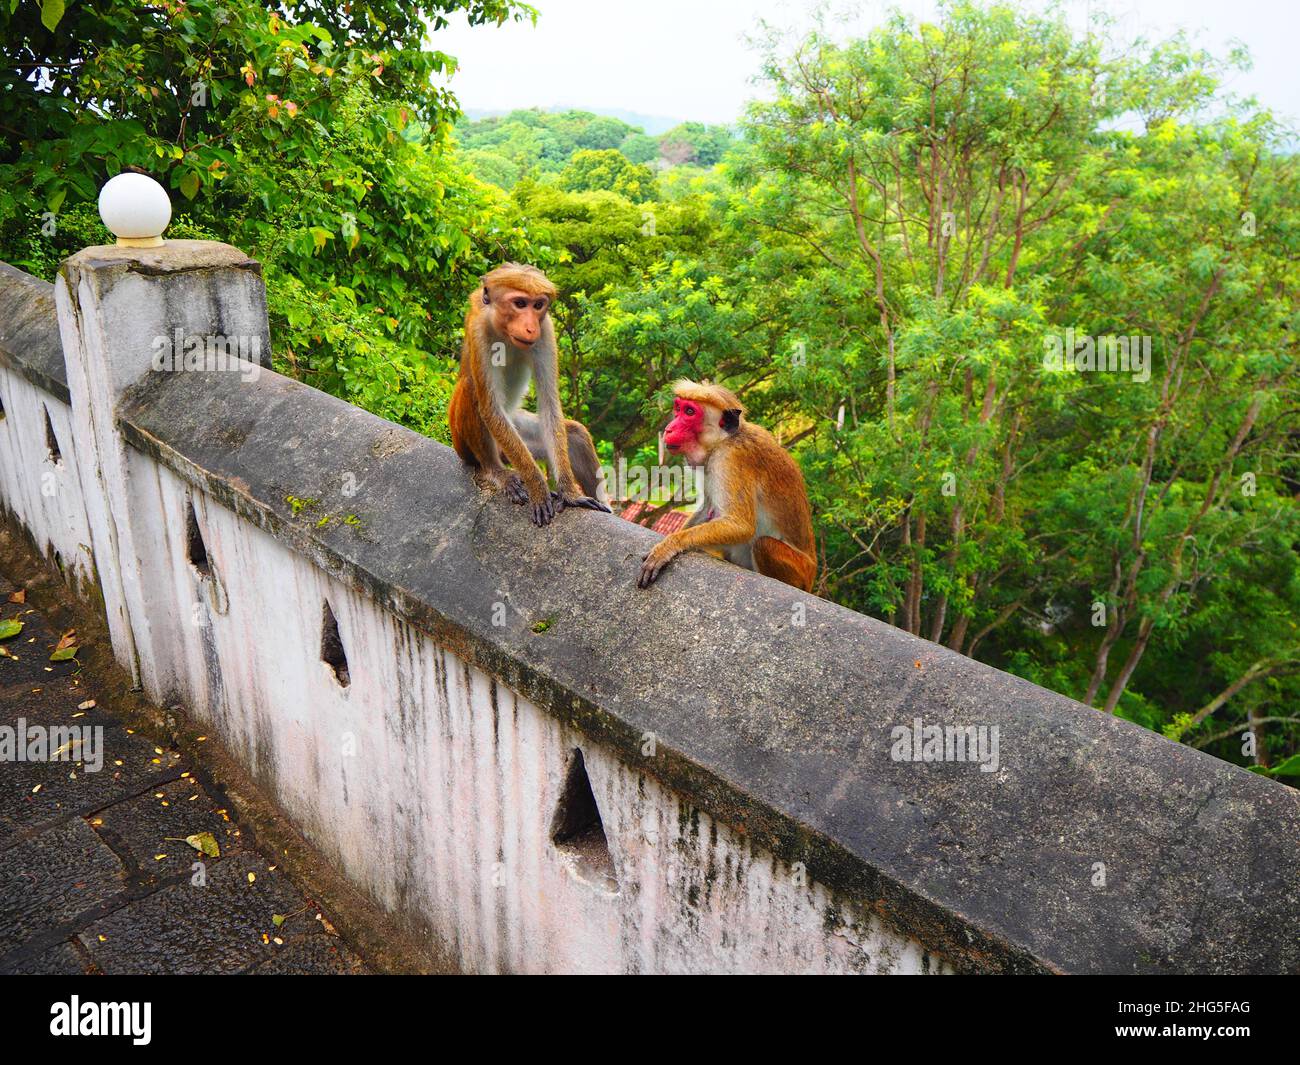 Mokeys in a Temple, Travel again Südostasien #Asien #authentisch #fernweh #slowtravel #stayinspired #DreamNowVisitLater #TravelAgain #Corona Stockfoto